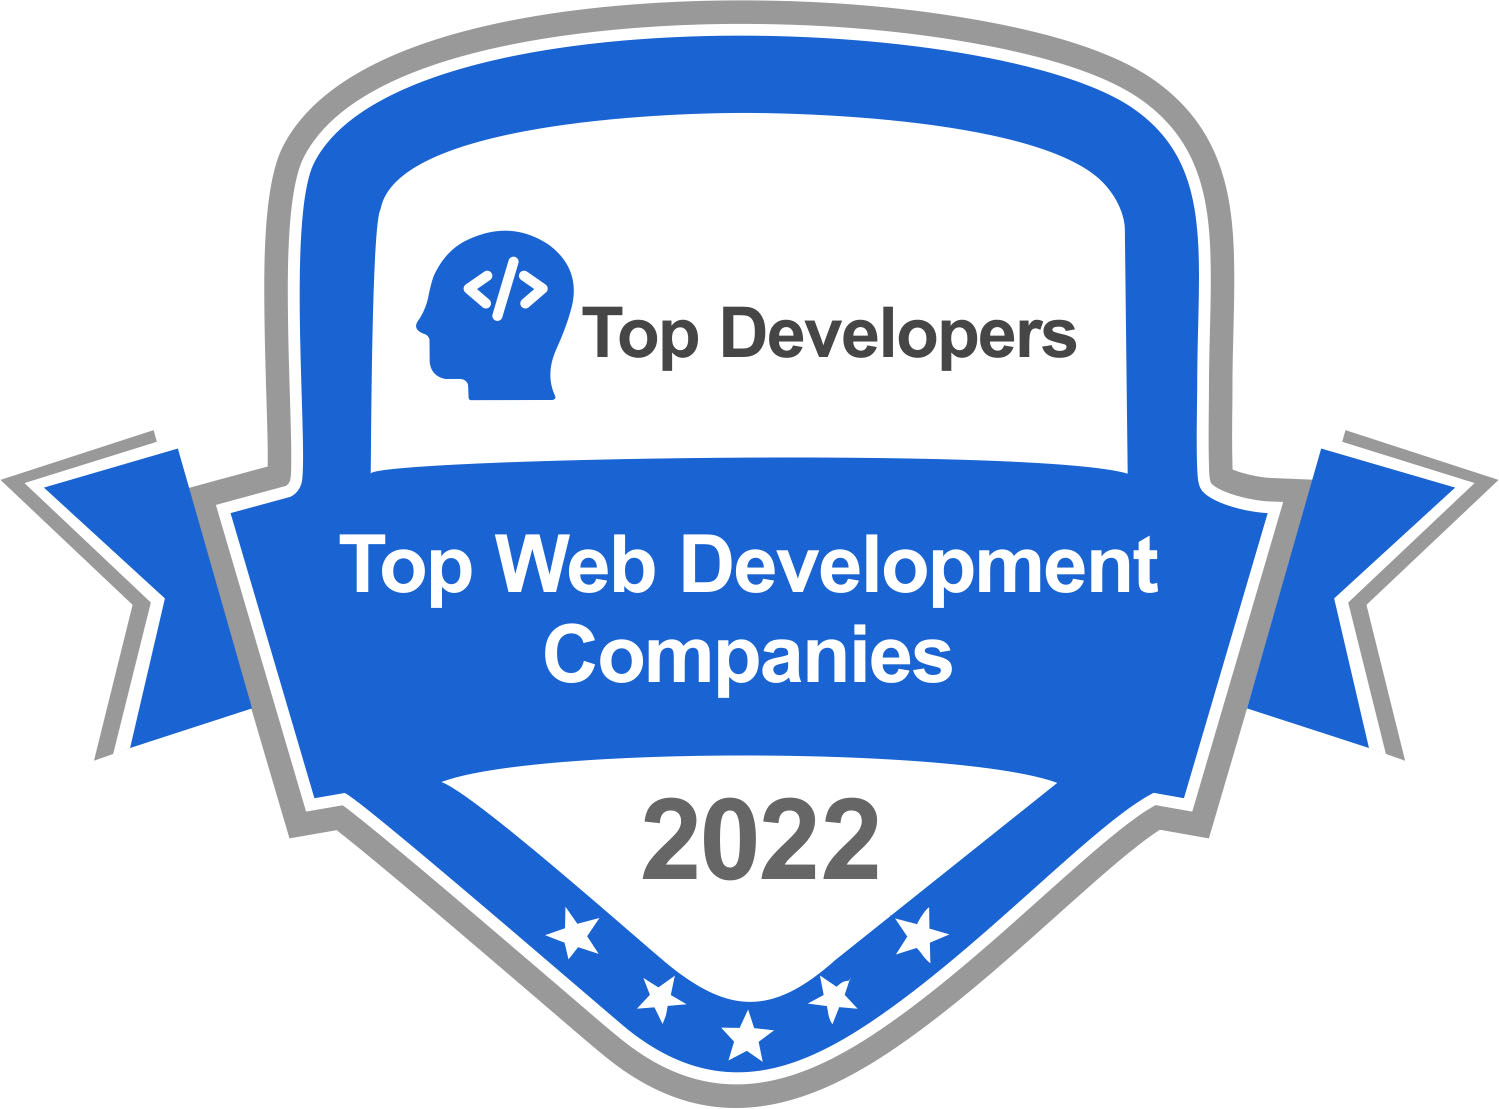 Top Web Development